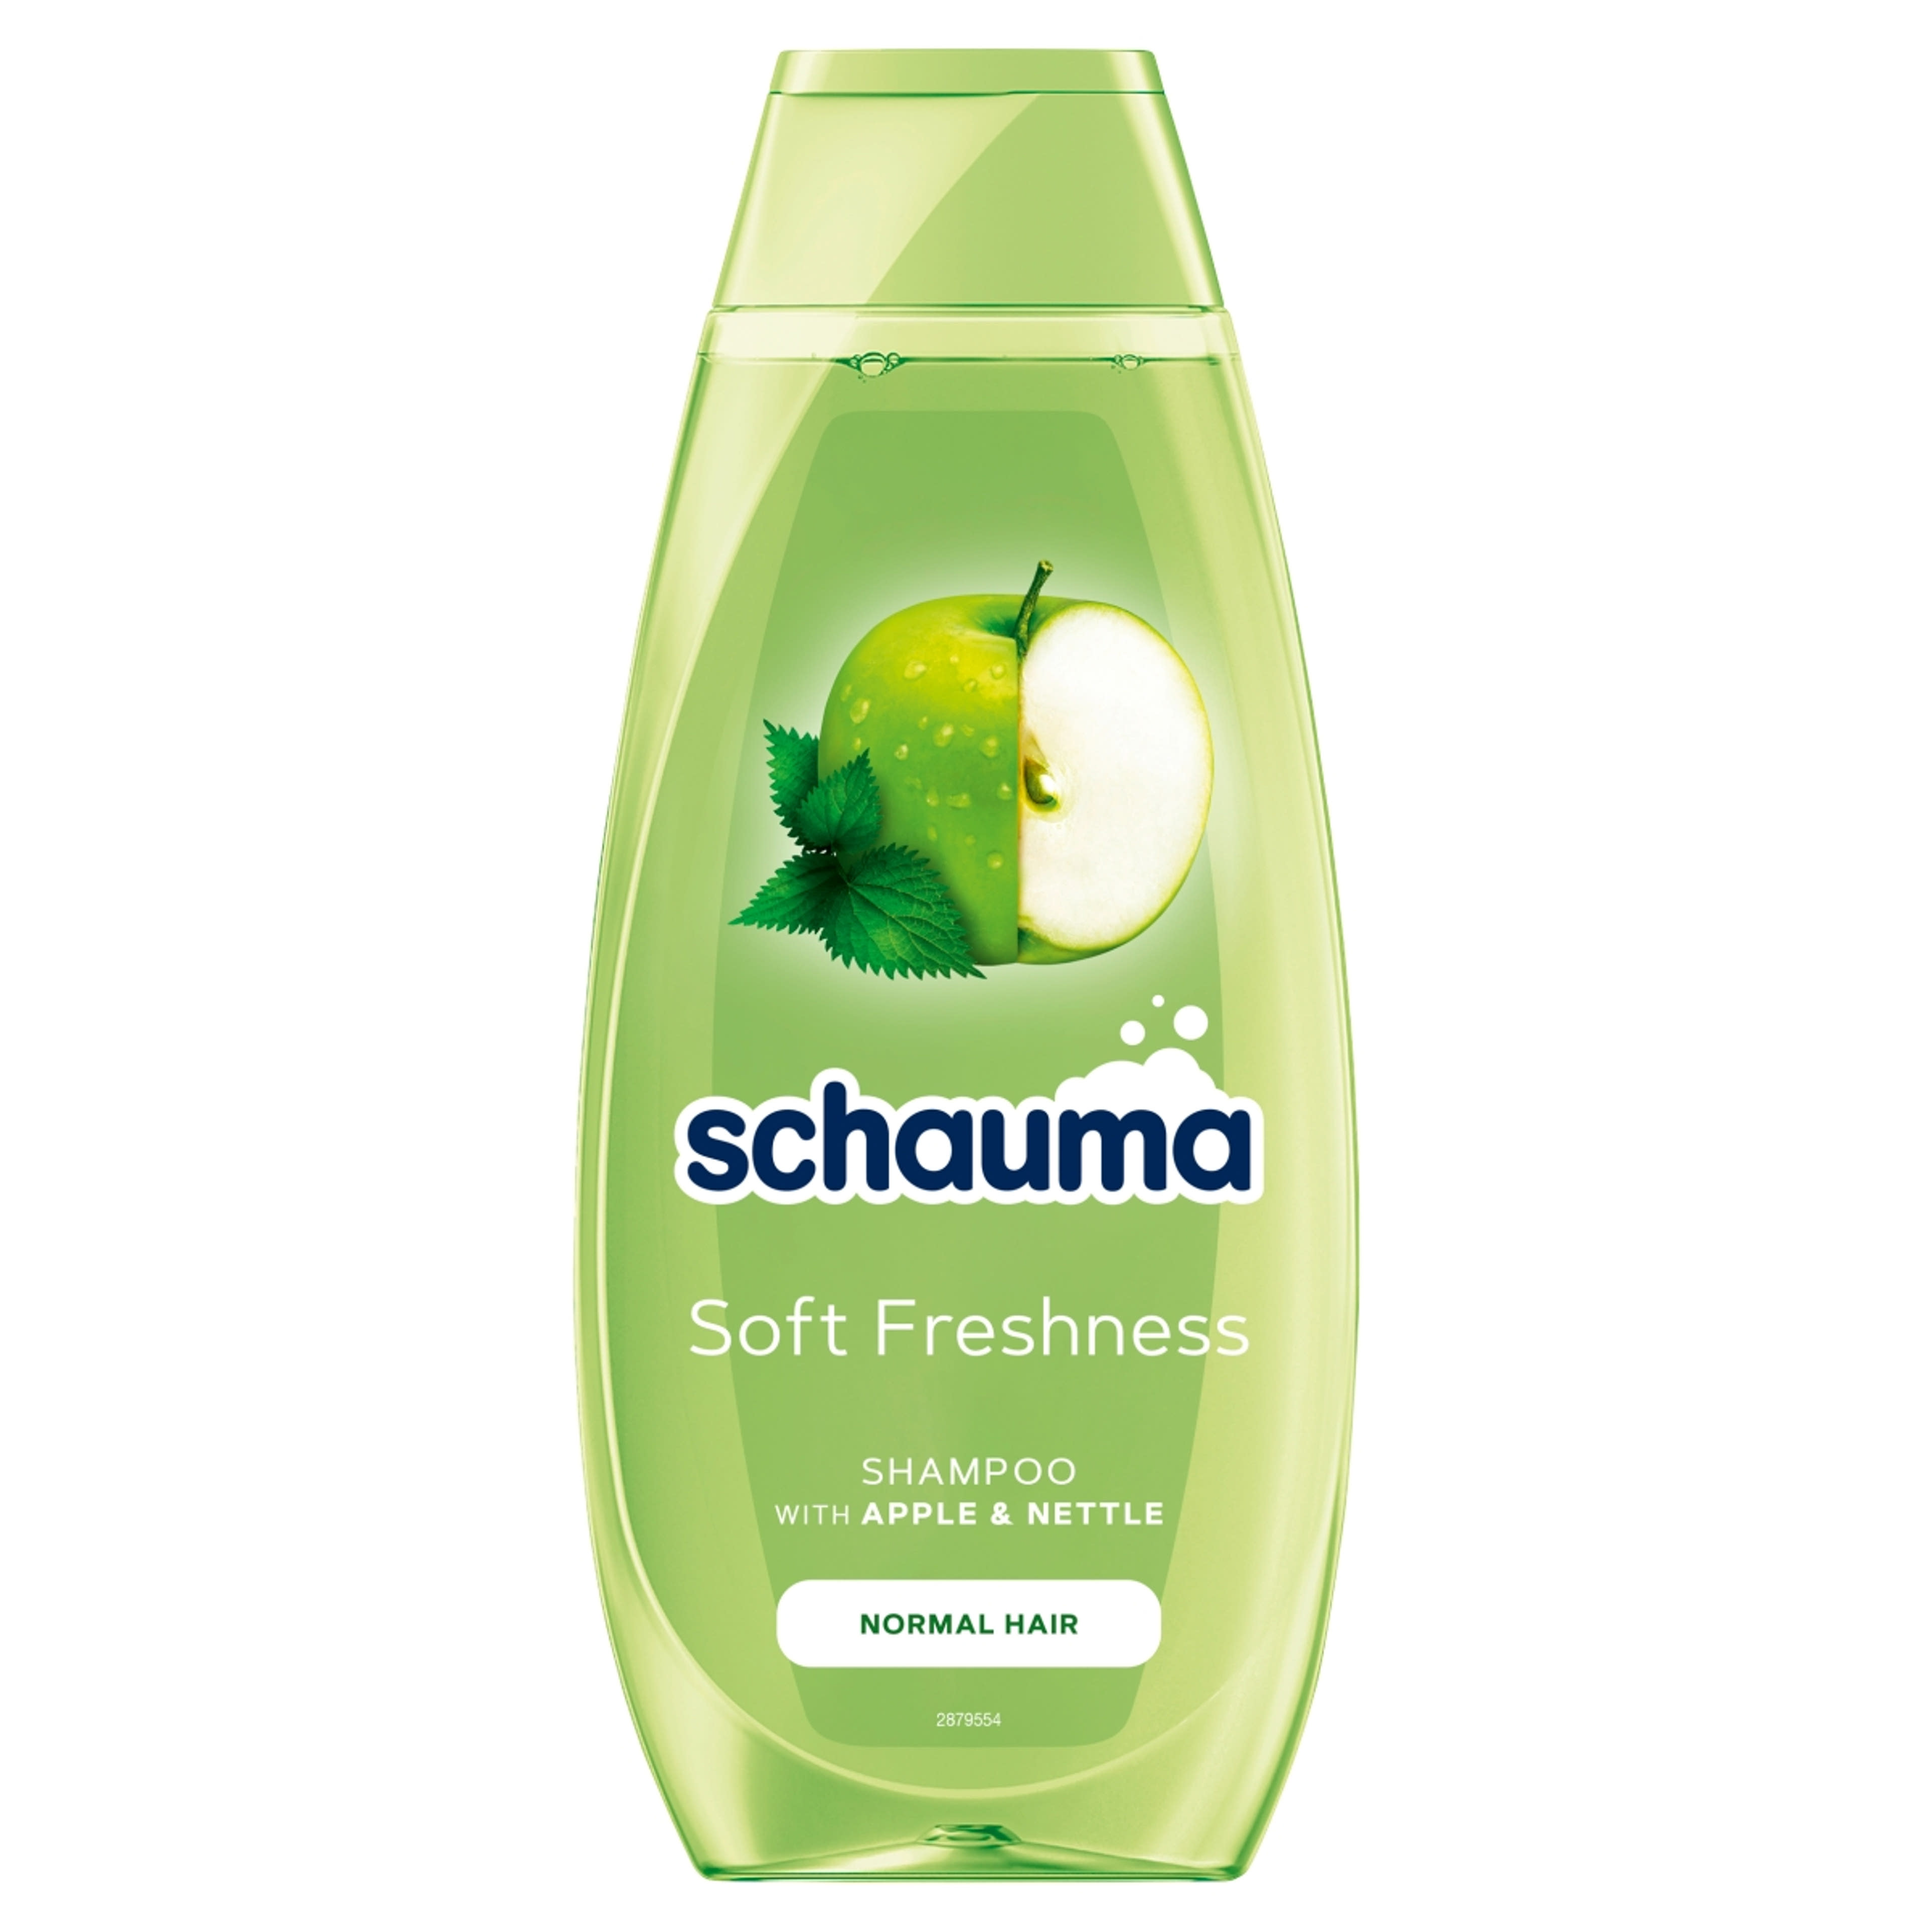 Schauma sampon Clean & Fresh zöld almával és csalánnal - 400 ml